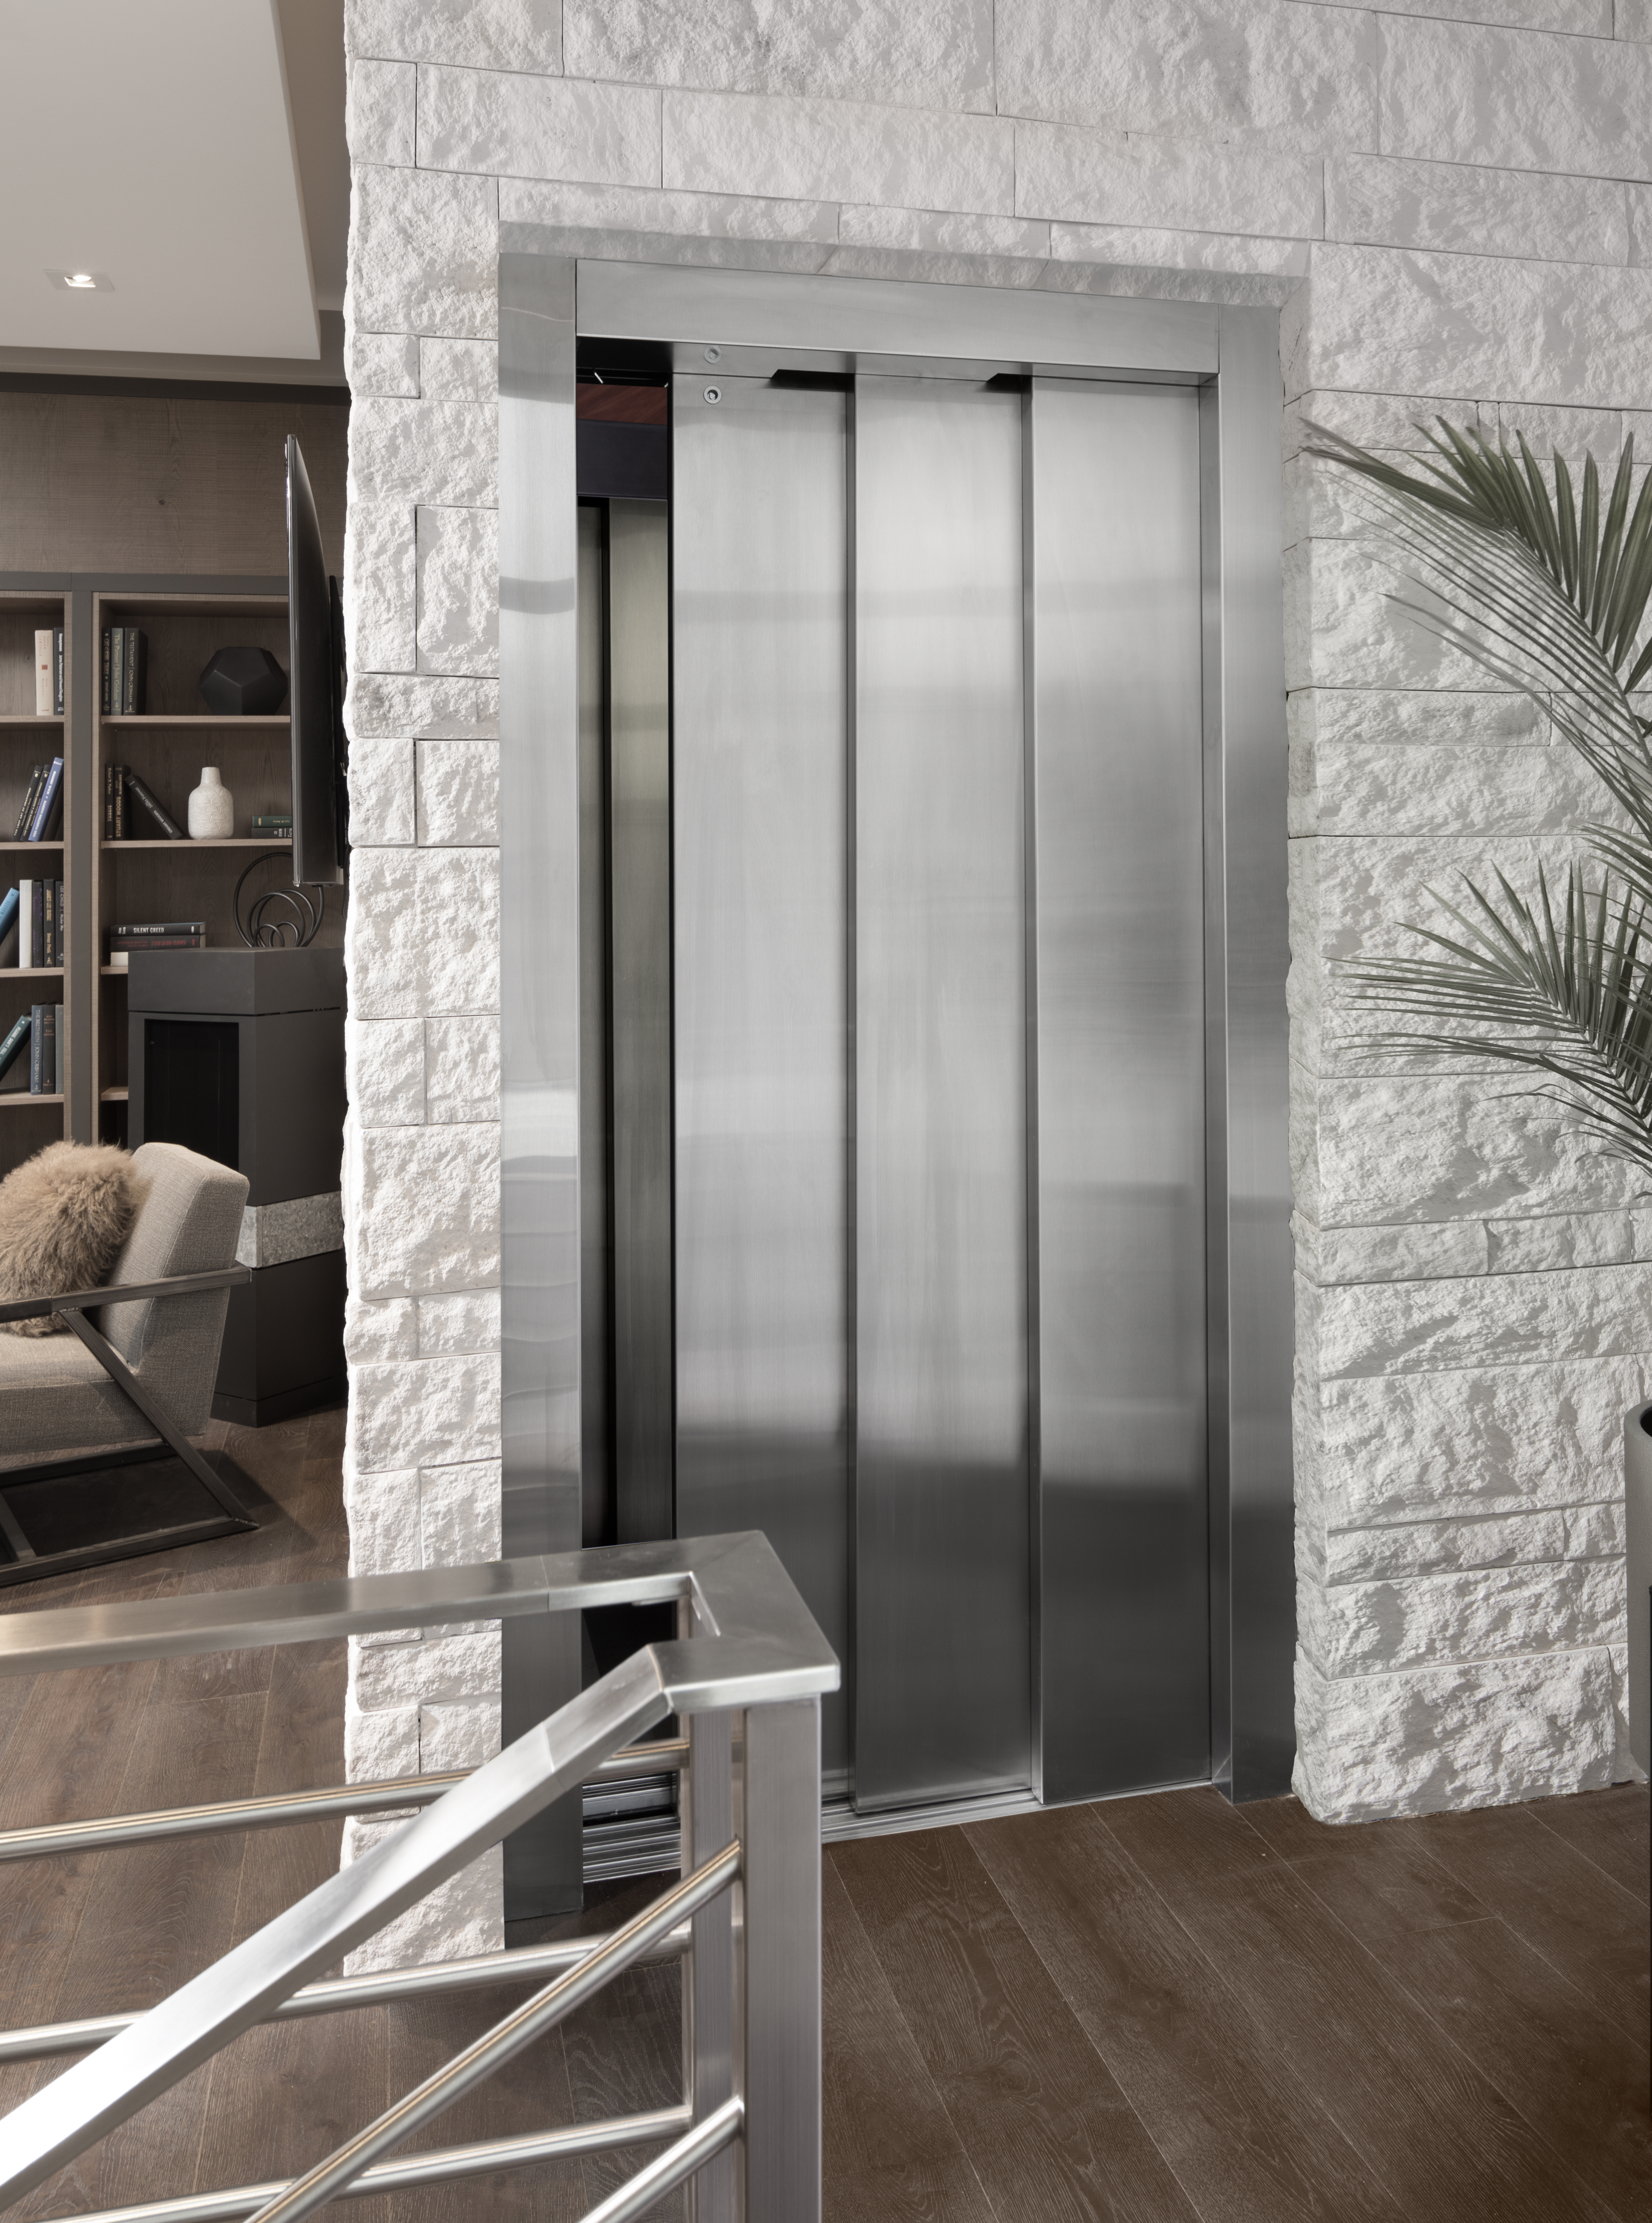 Home Elevators, Residential Elevators